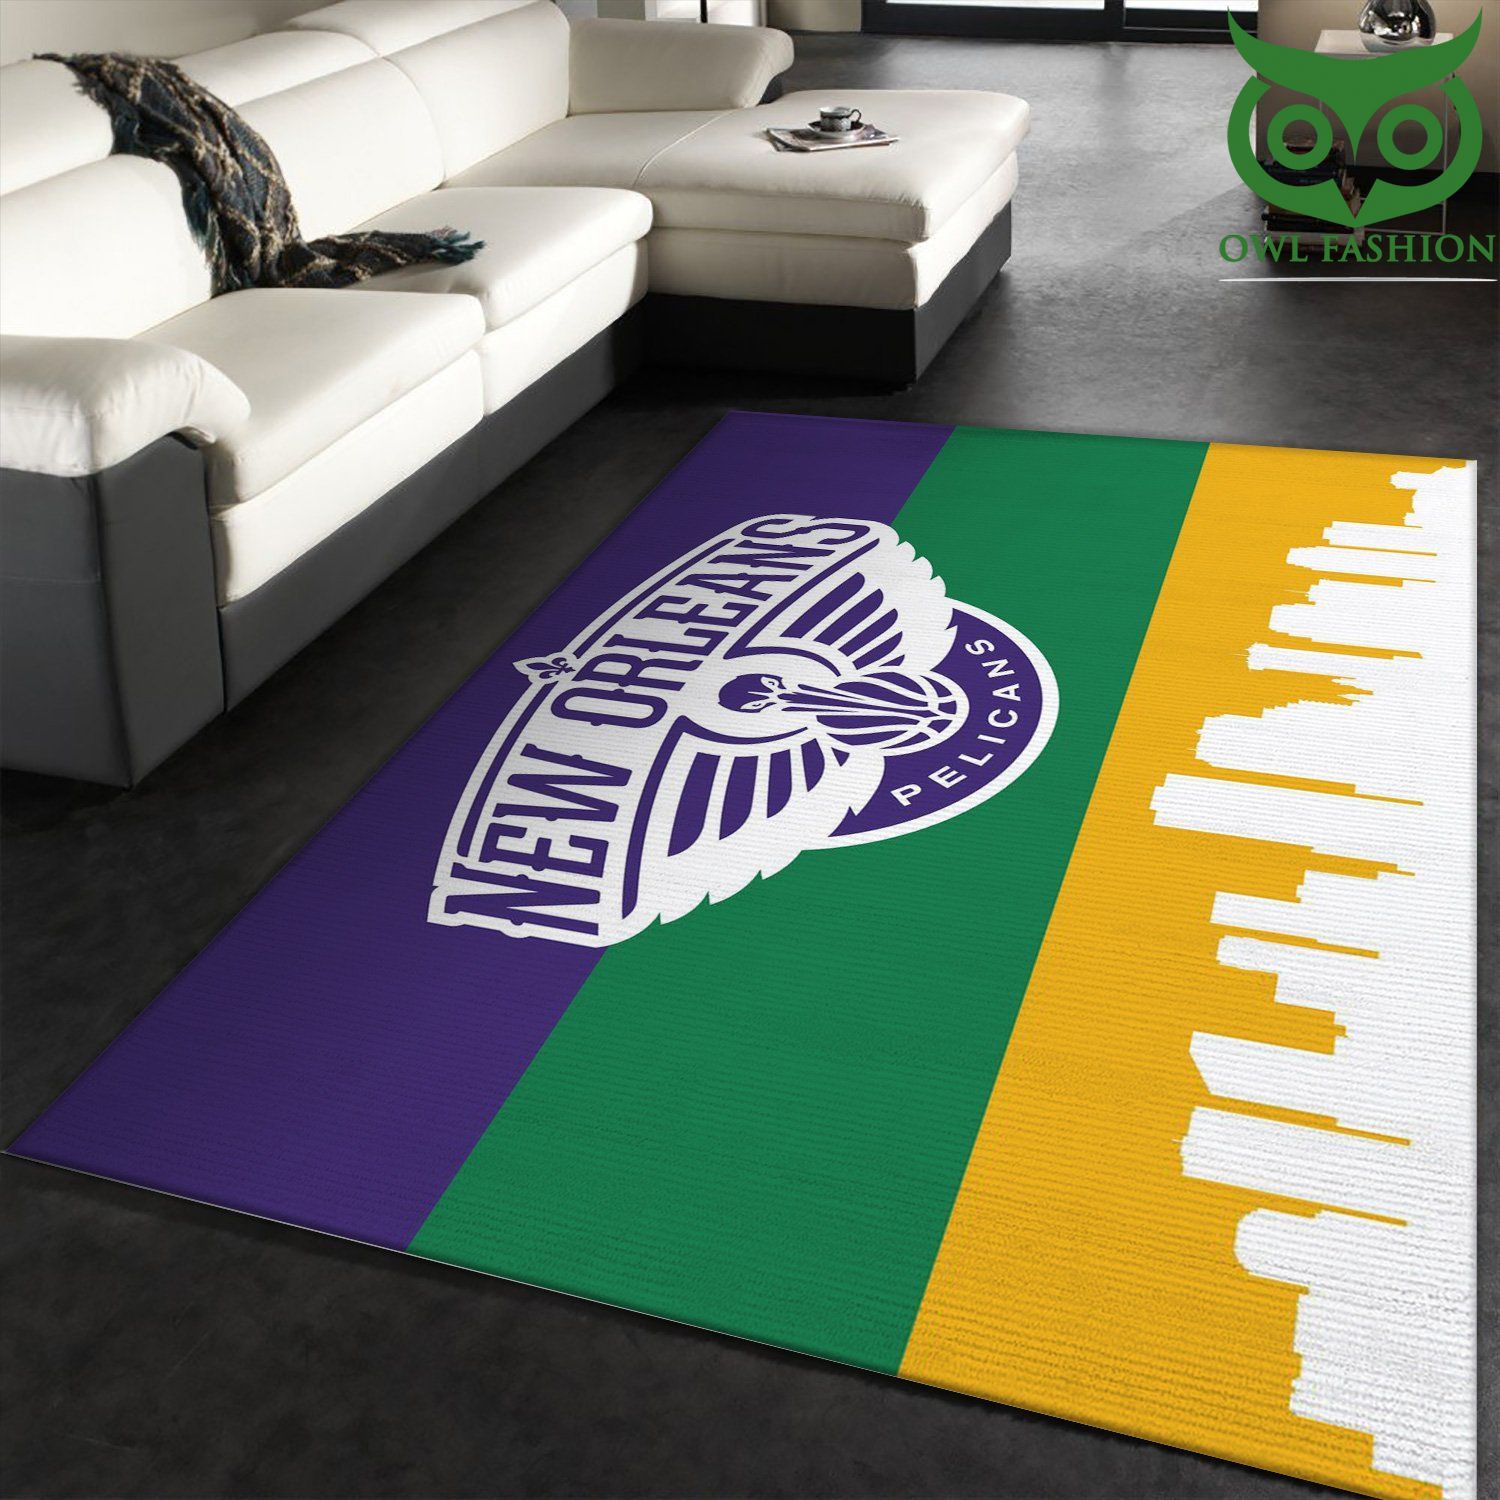 New Orleans Pelicans 3 NBA Team Logo Area carpet rug Home and floor Decor